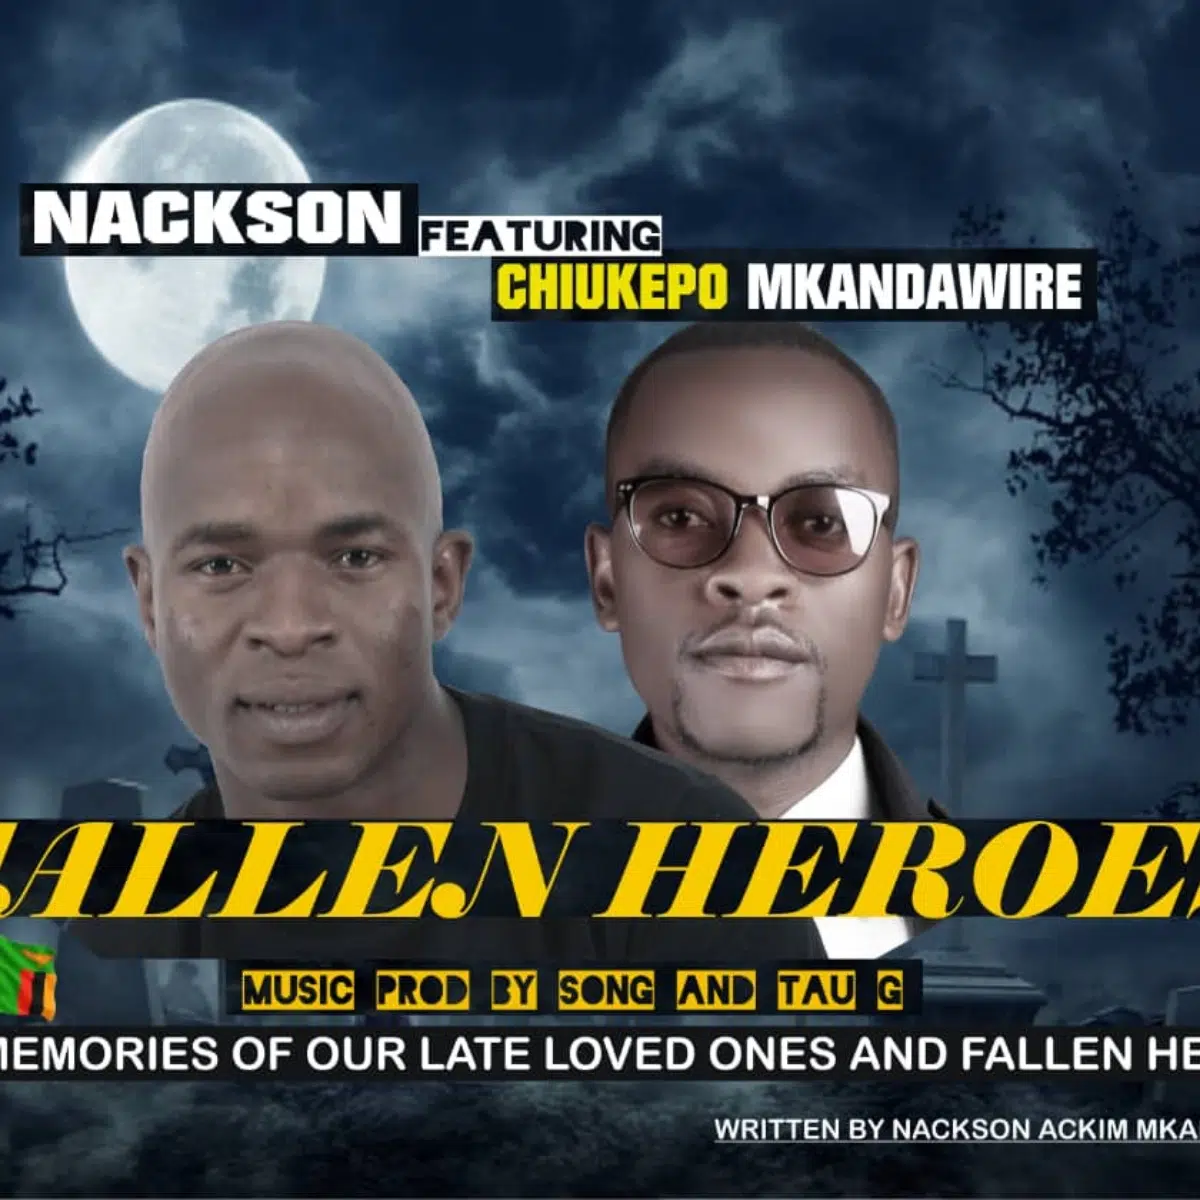 DOWNLOAD: Nackson Feat Chukepo Mkandawire – ”Fallen Heroes” Mp3